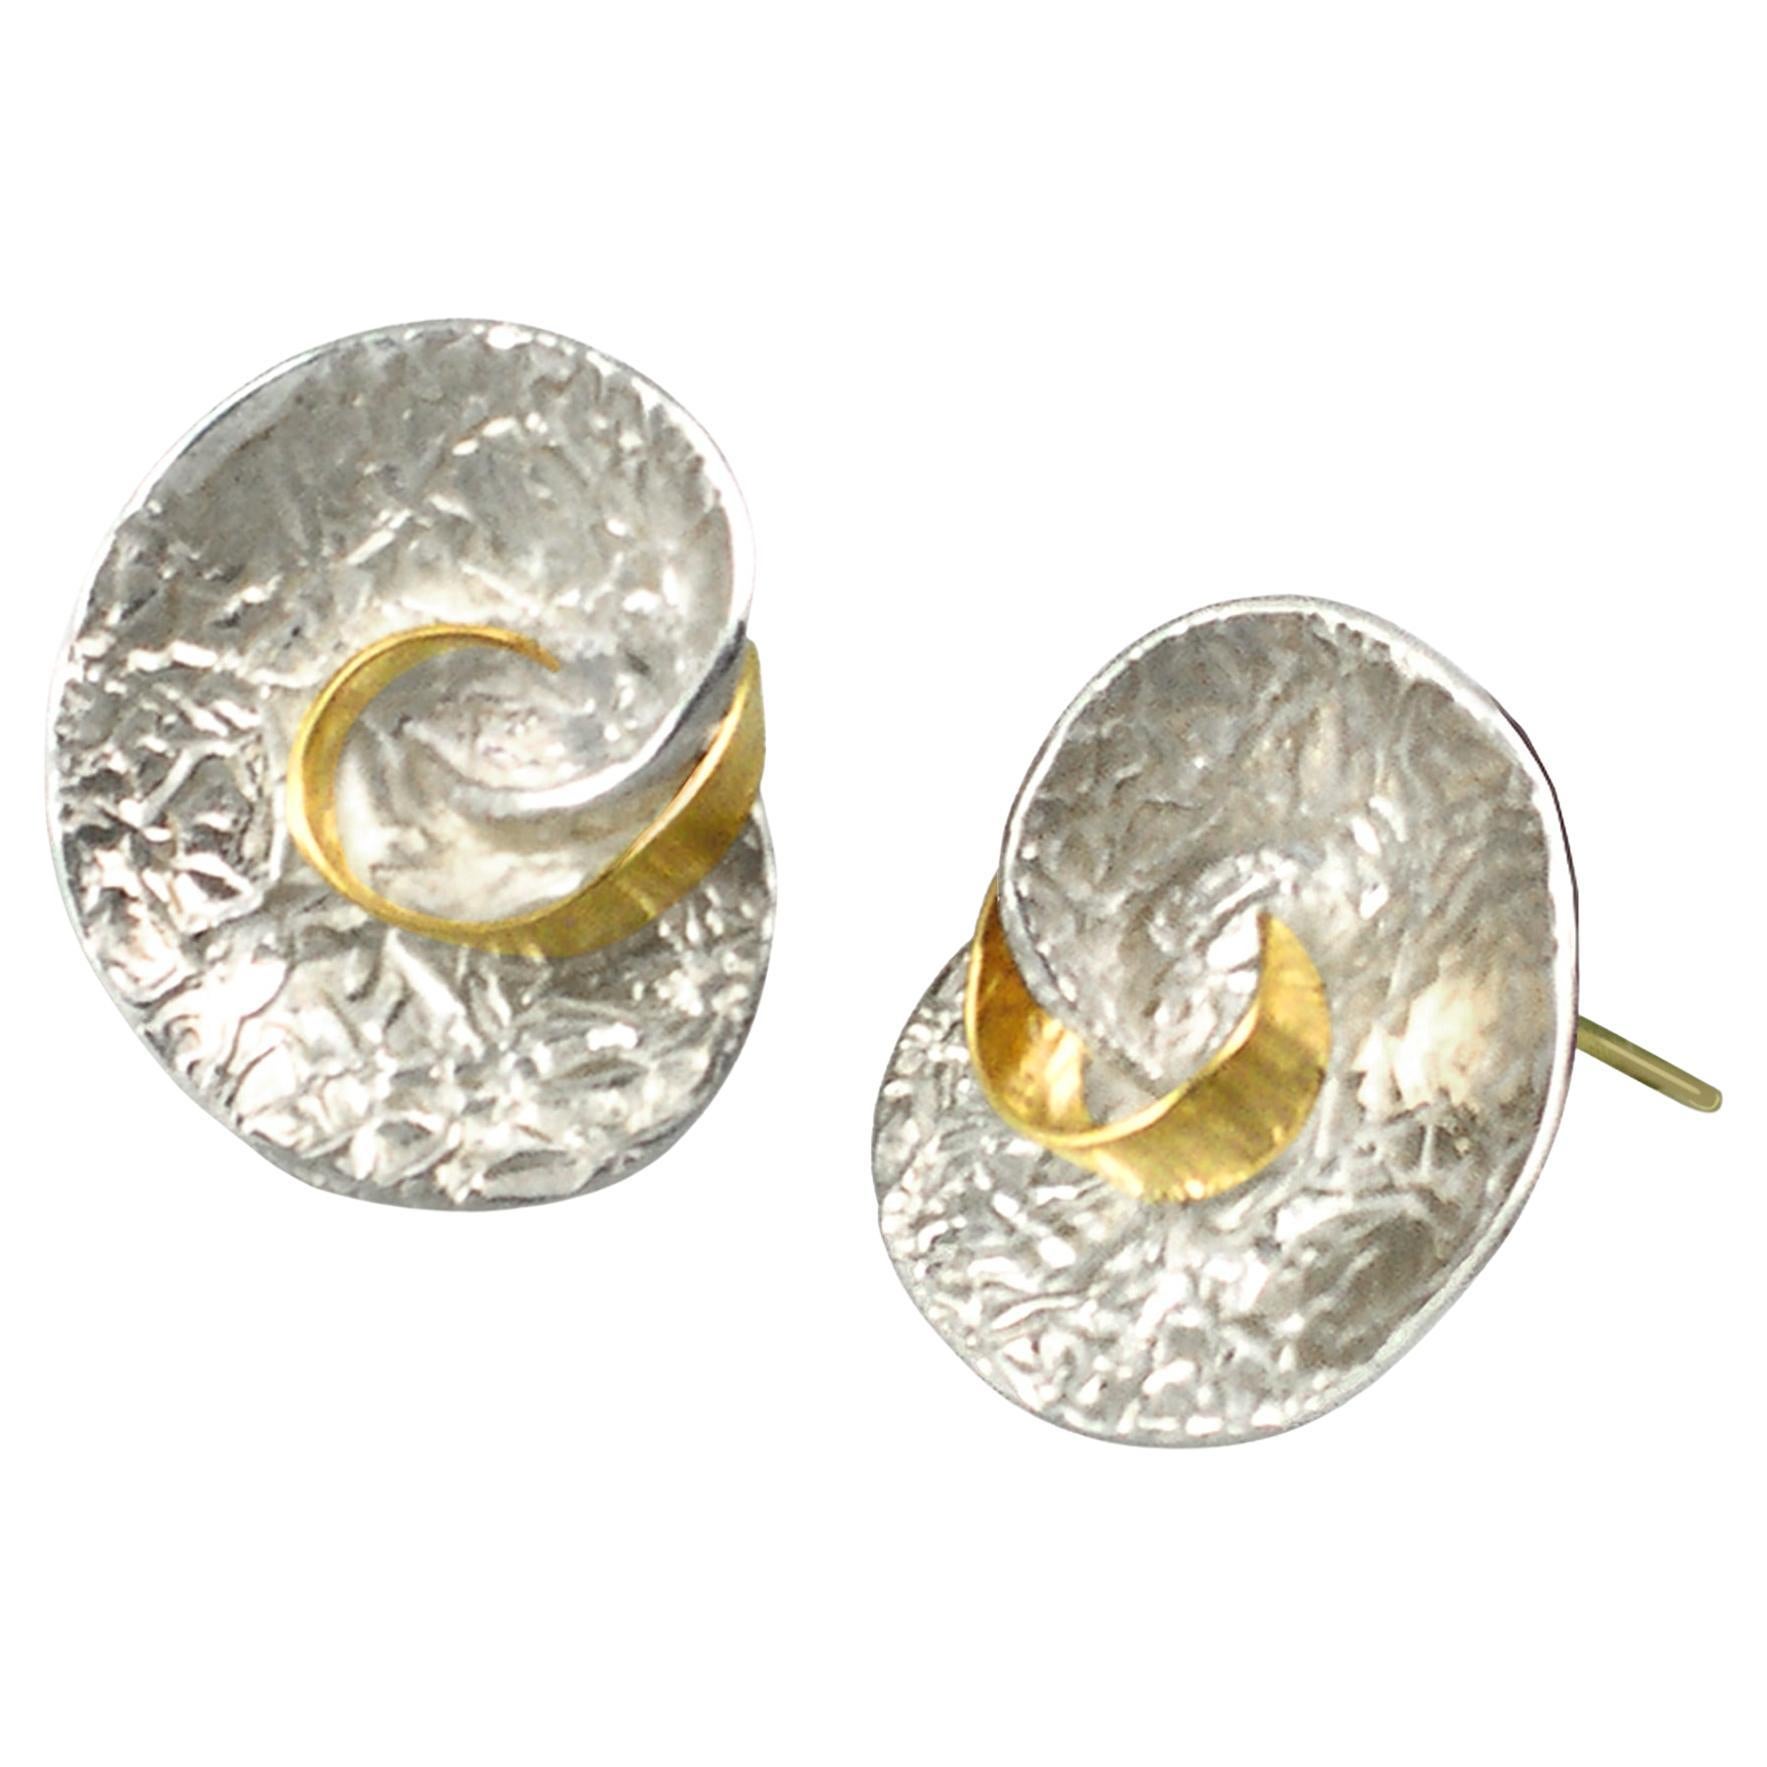 18 Karat Yellow Gold and Sterling Silver Swirl Earrings by Keiko Mita